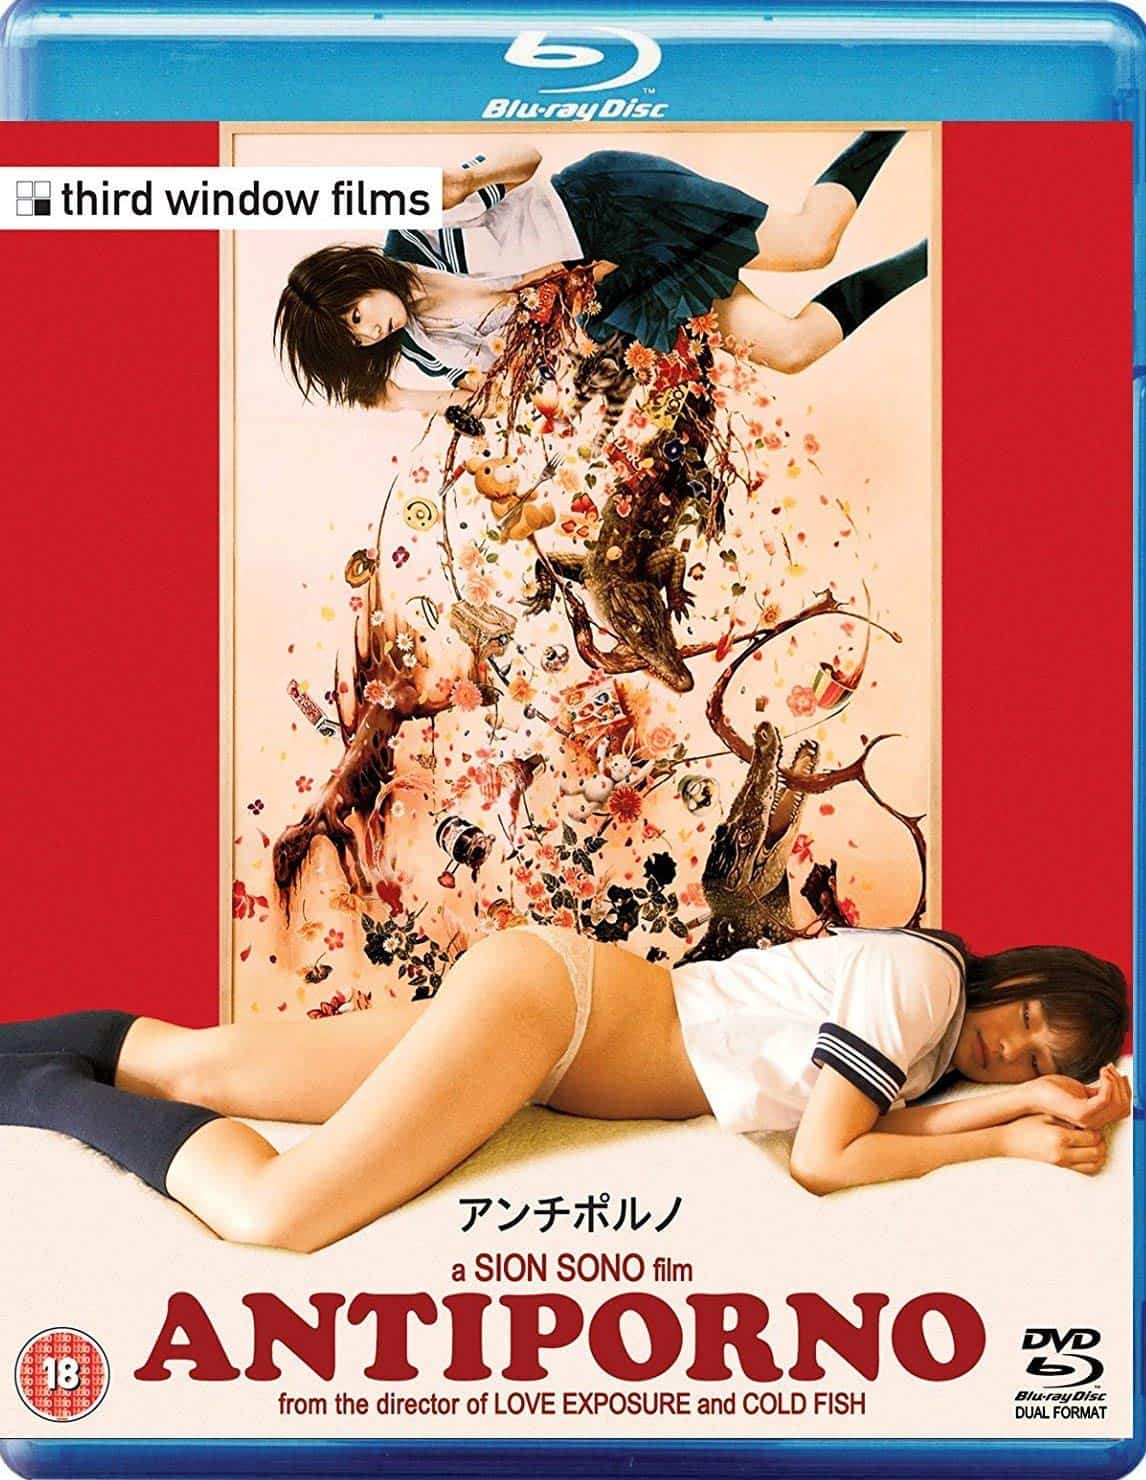 Free japanese adult films